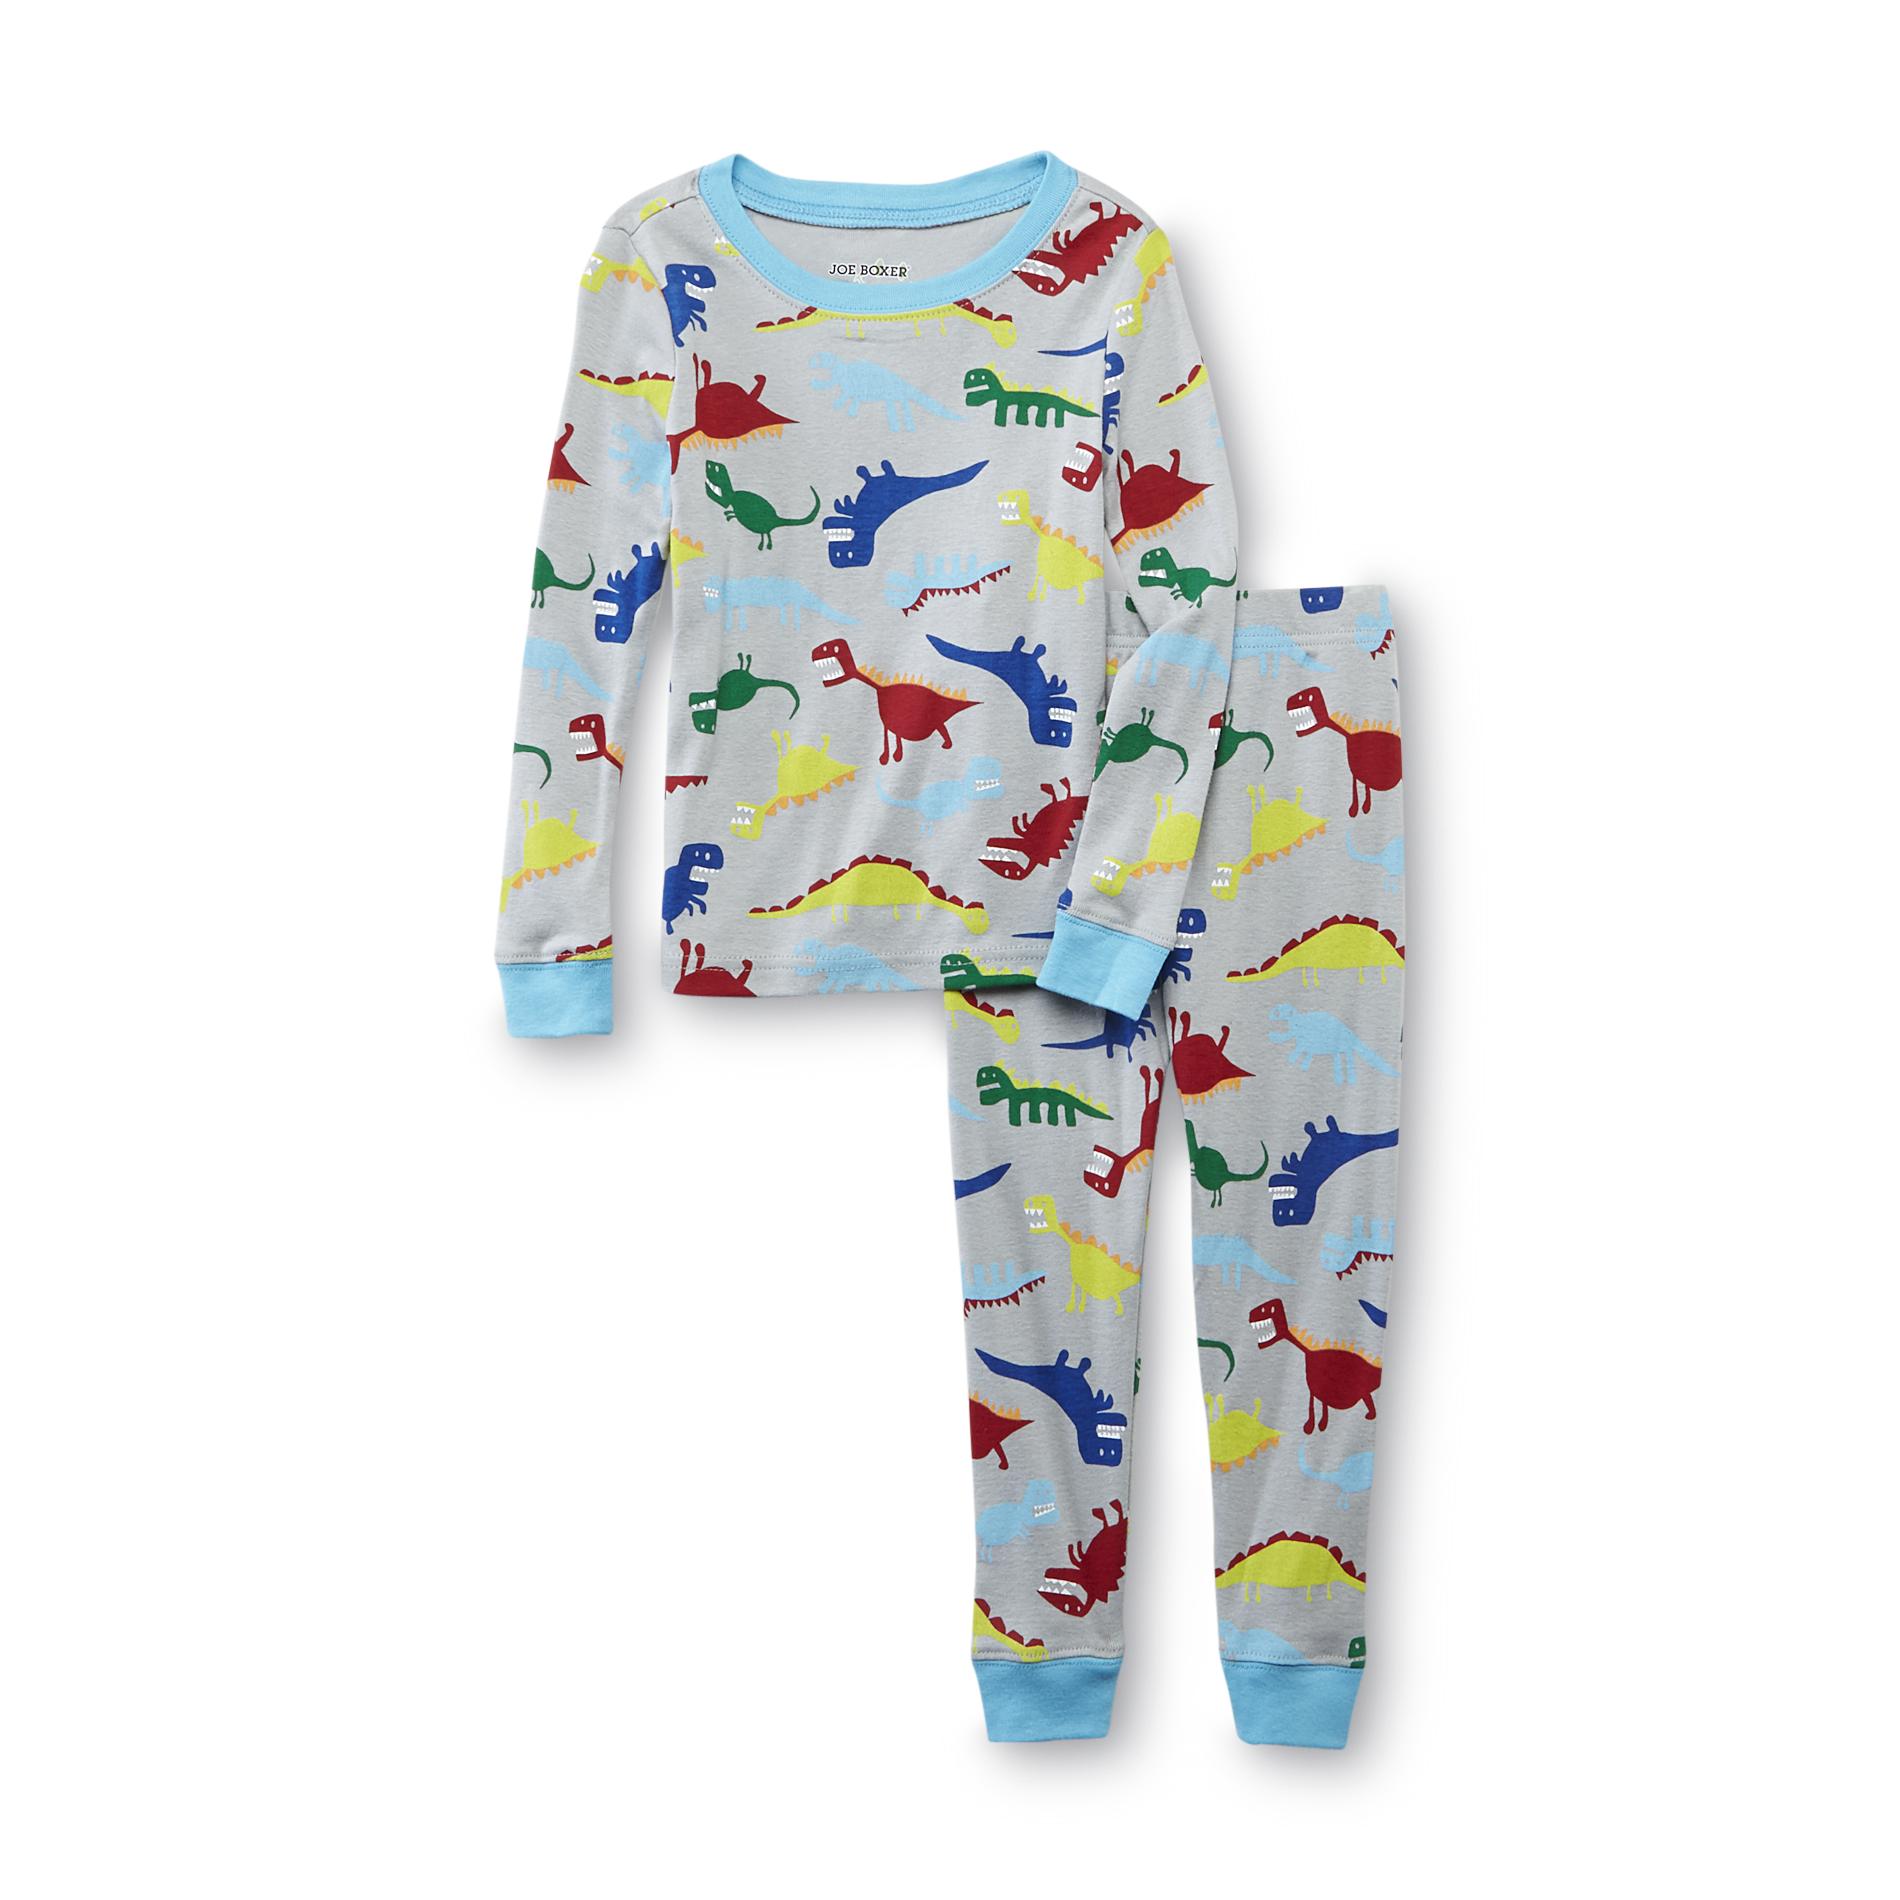 Joe Boxer Infant & Toddler Boy's 2-Pairs Pajamas - Dinosaur